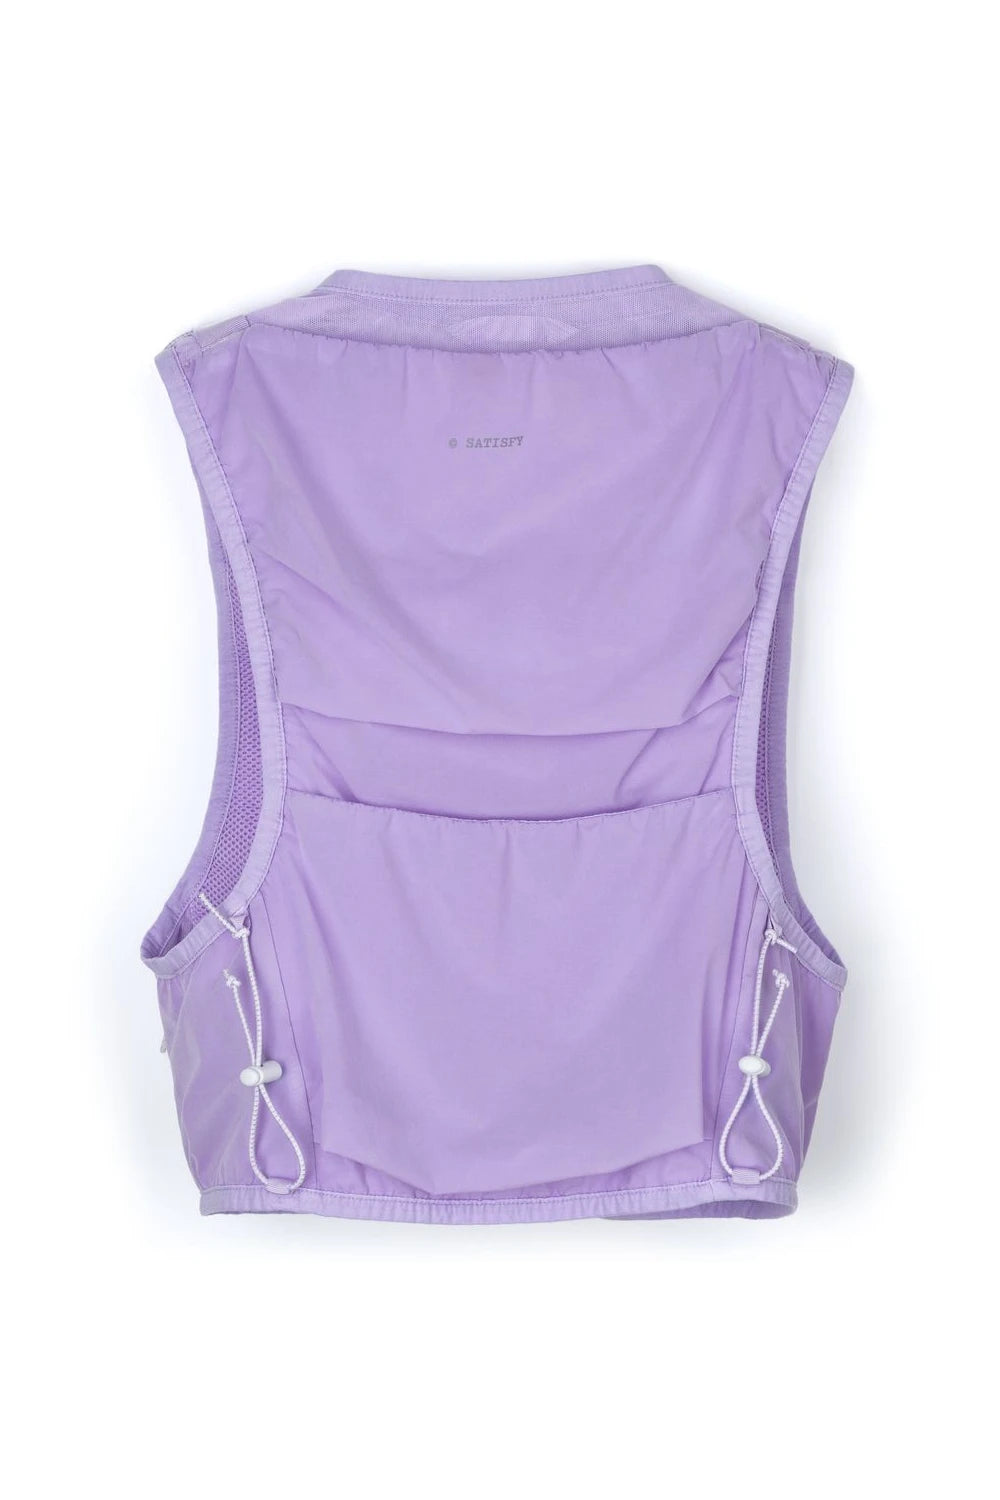 Satisfy Justice™ Cordura® 5L Hydration Vest - Mineral Lilac